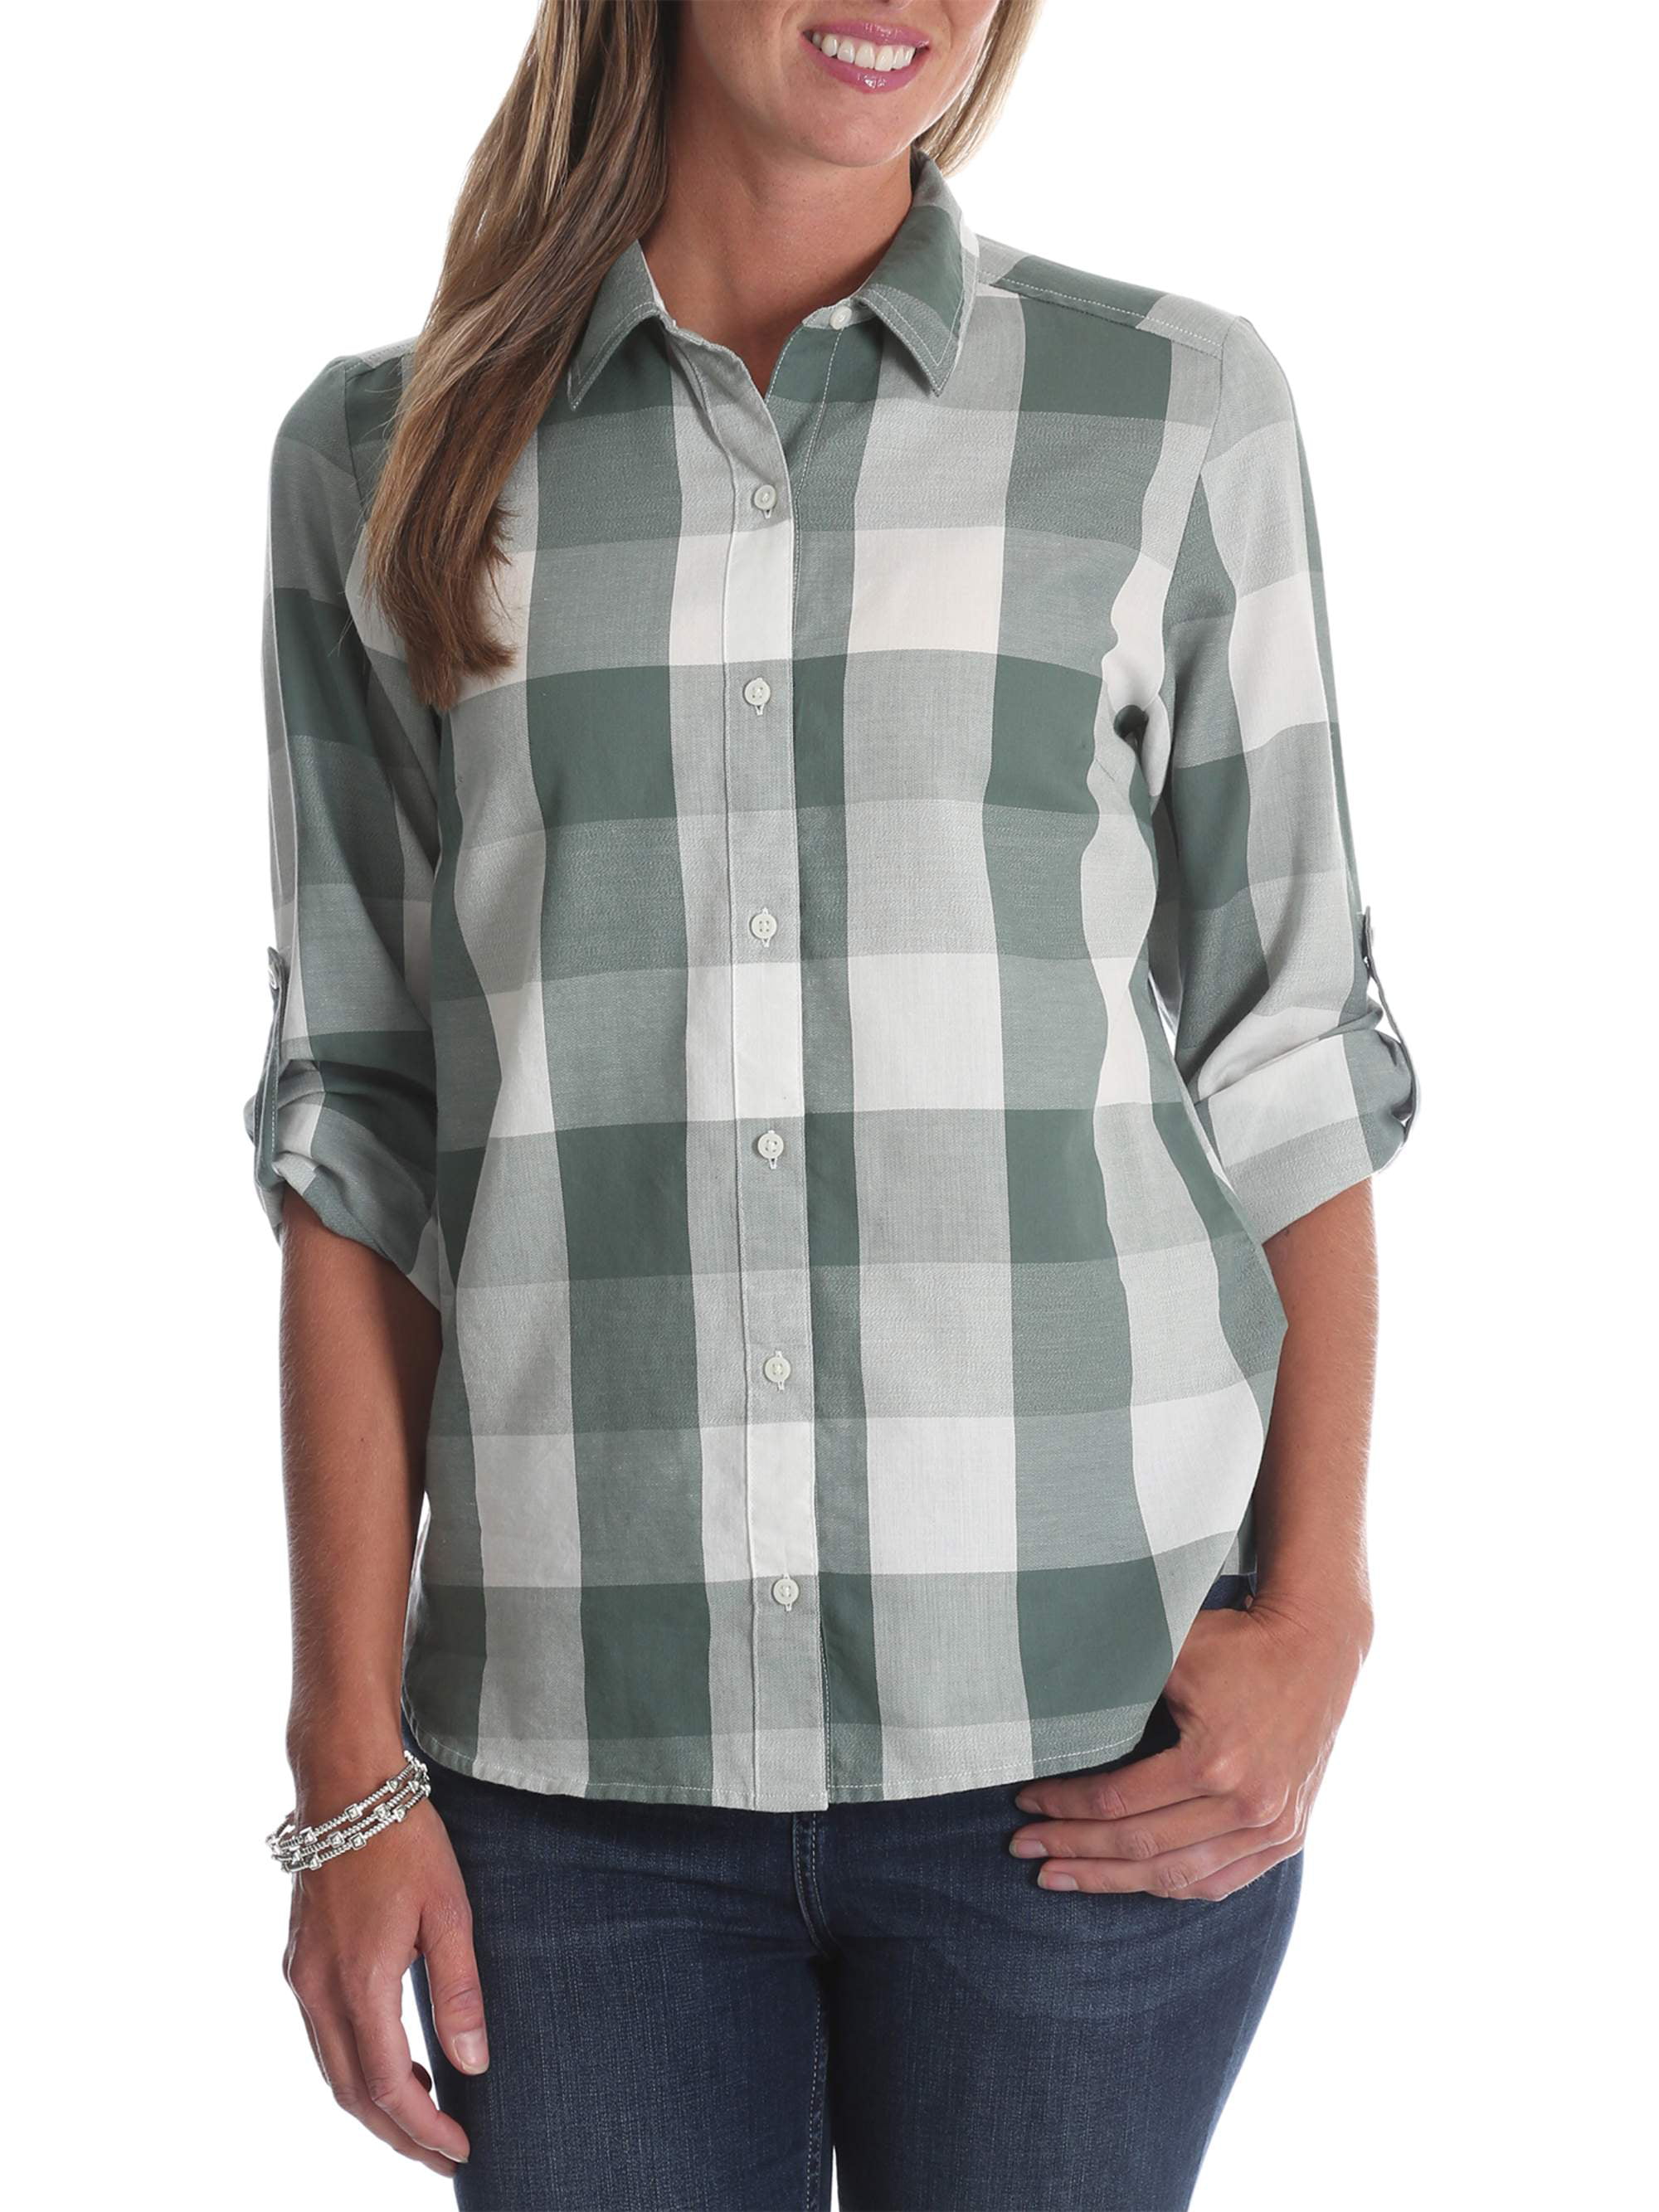 Lee Riders - Women's Long Sleeve Plaid Woven Shirt - Walmart.com - Walmart.com